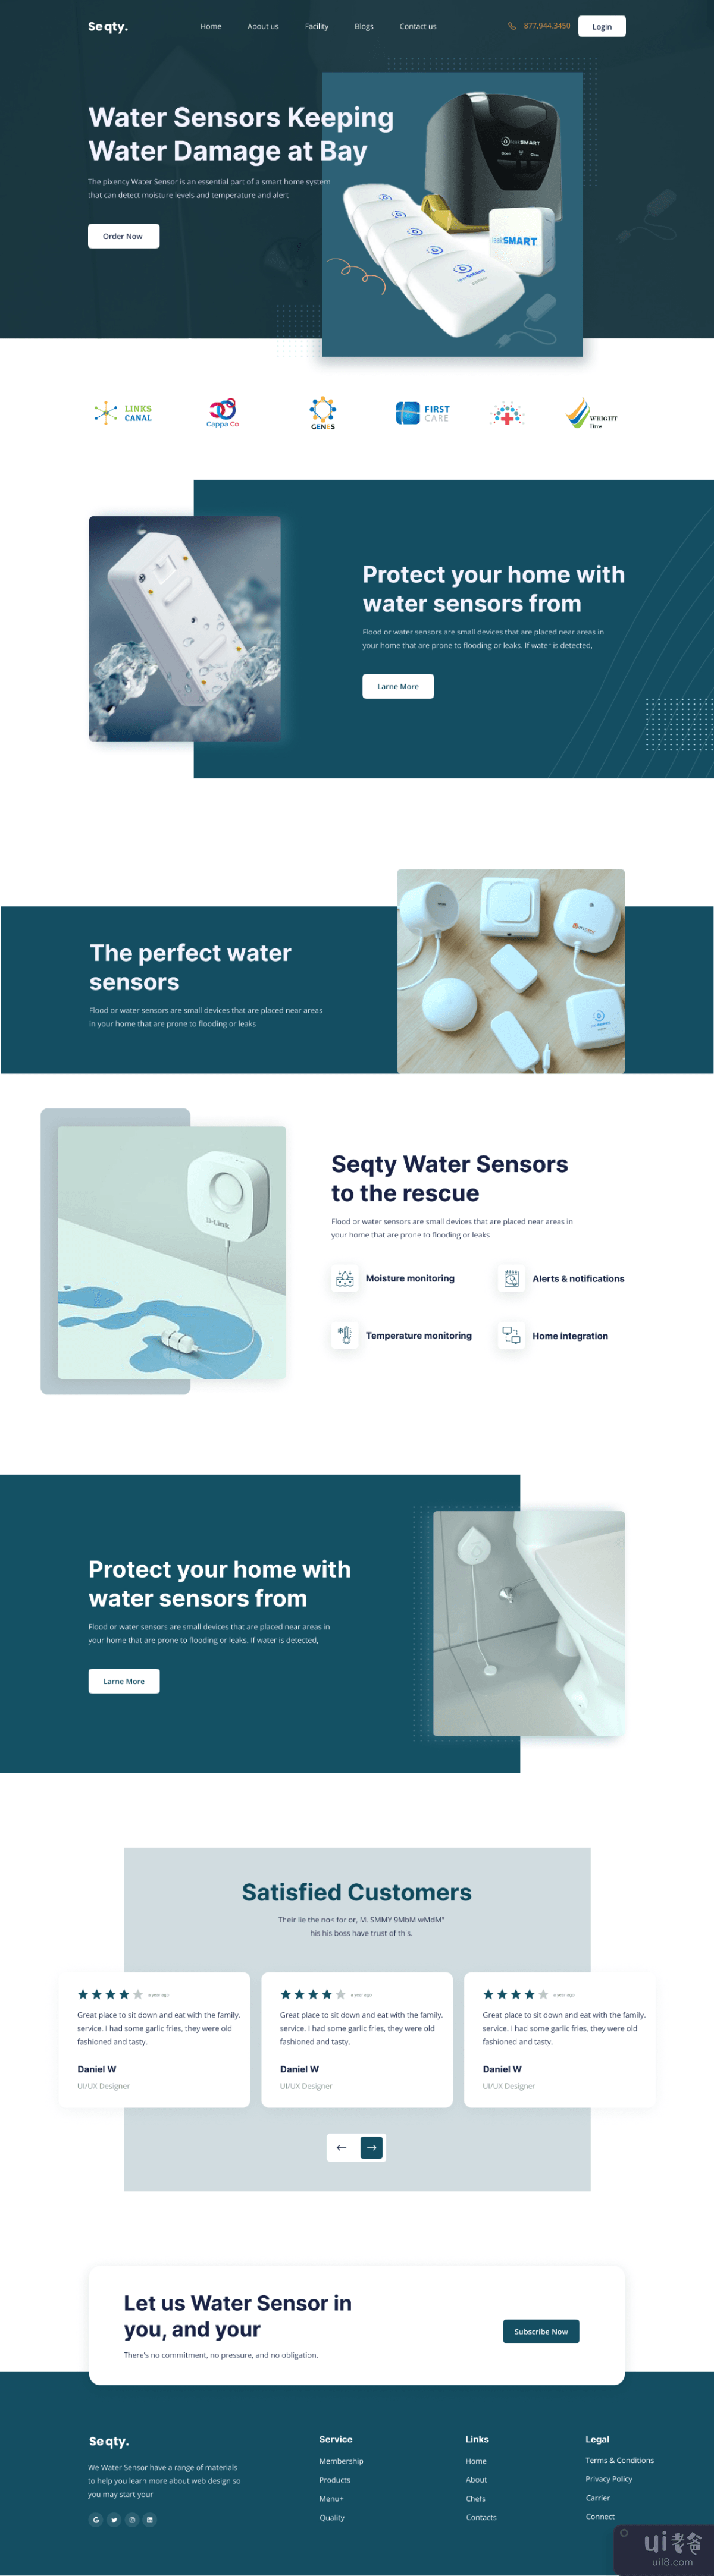 家庭安全水传感器登陆页面(Home Security Water Sensor landing page)插图